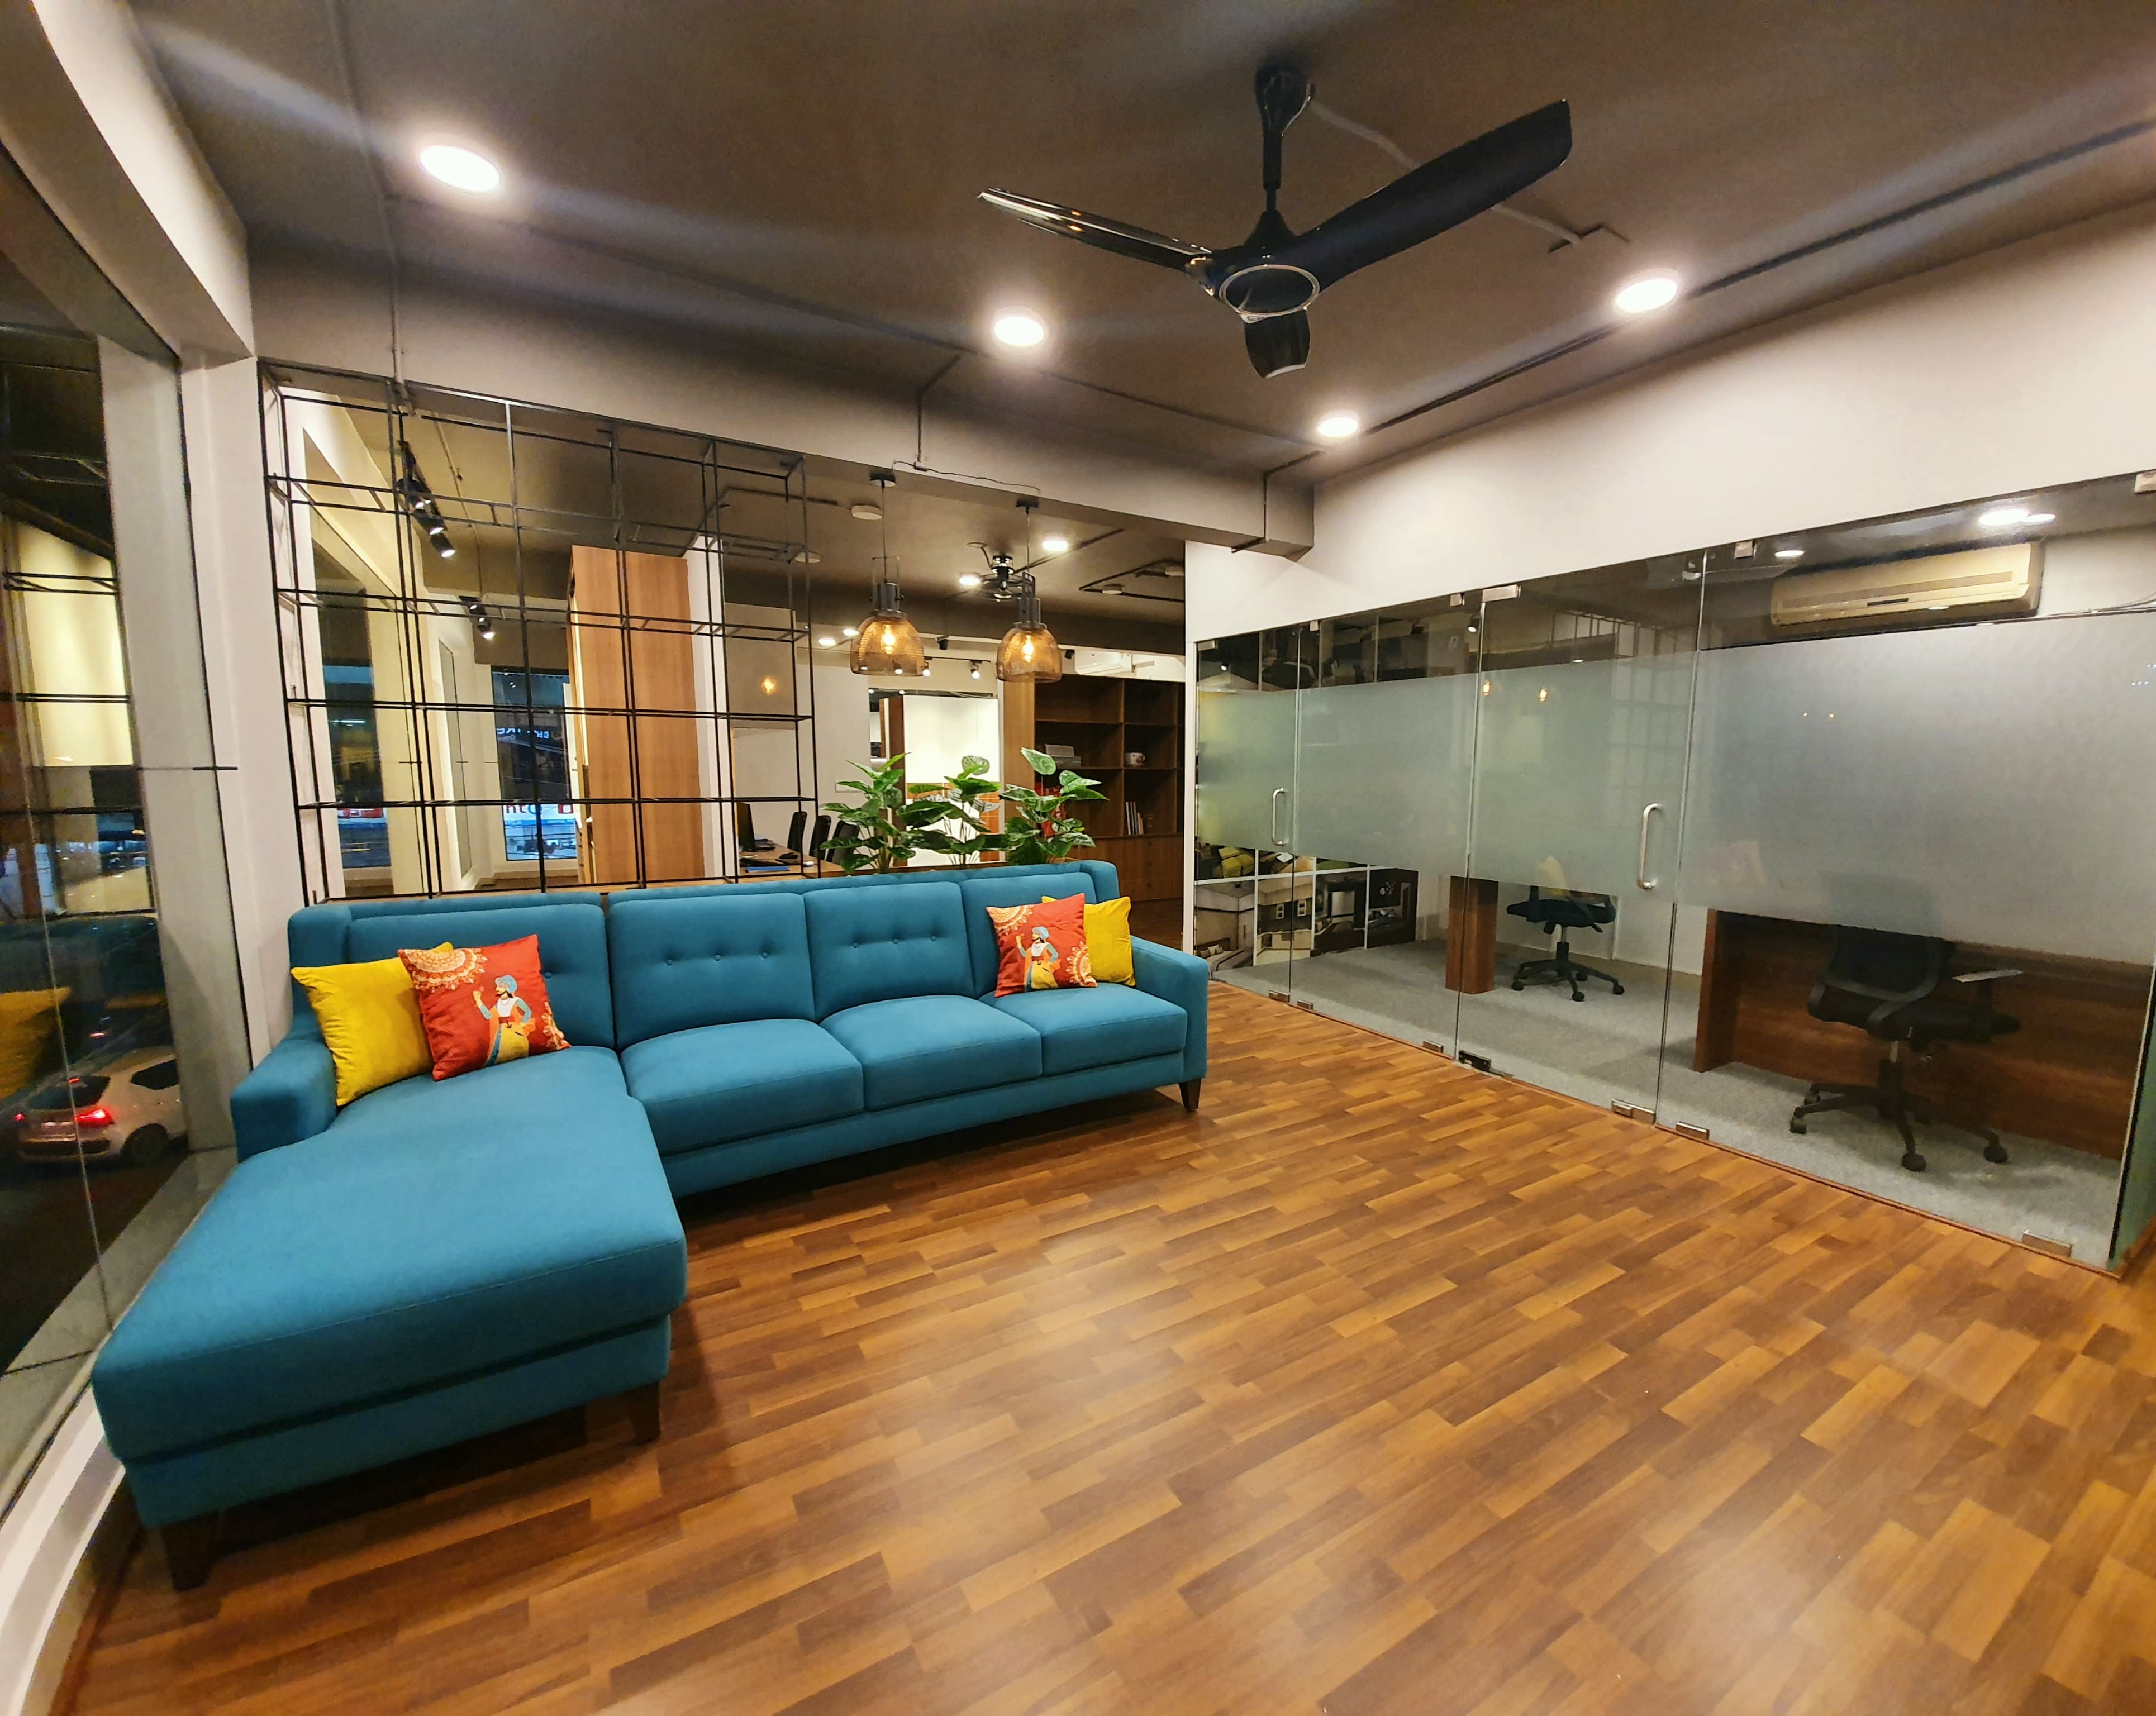 Space Trend Bangalore Interior Design Home decor living Room